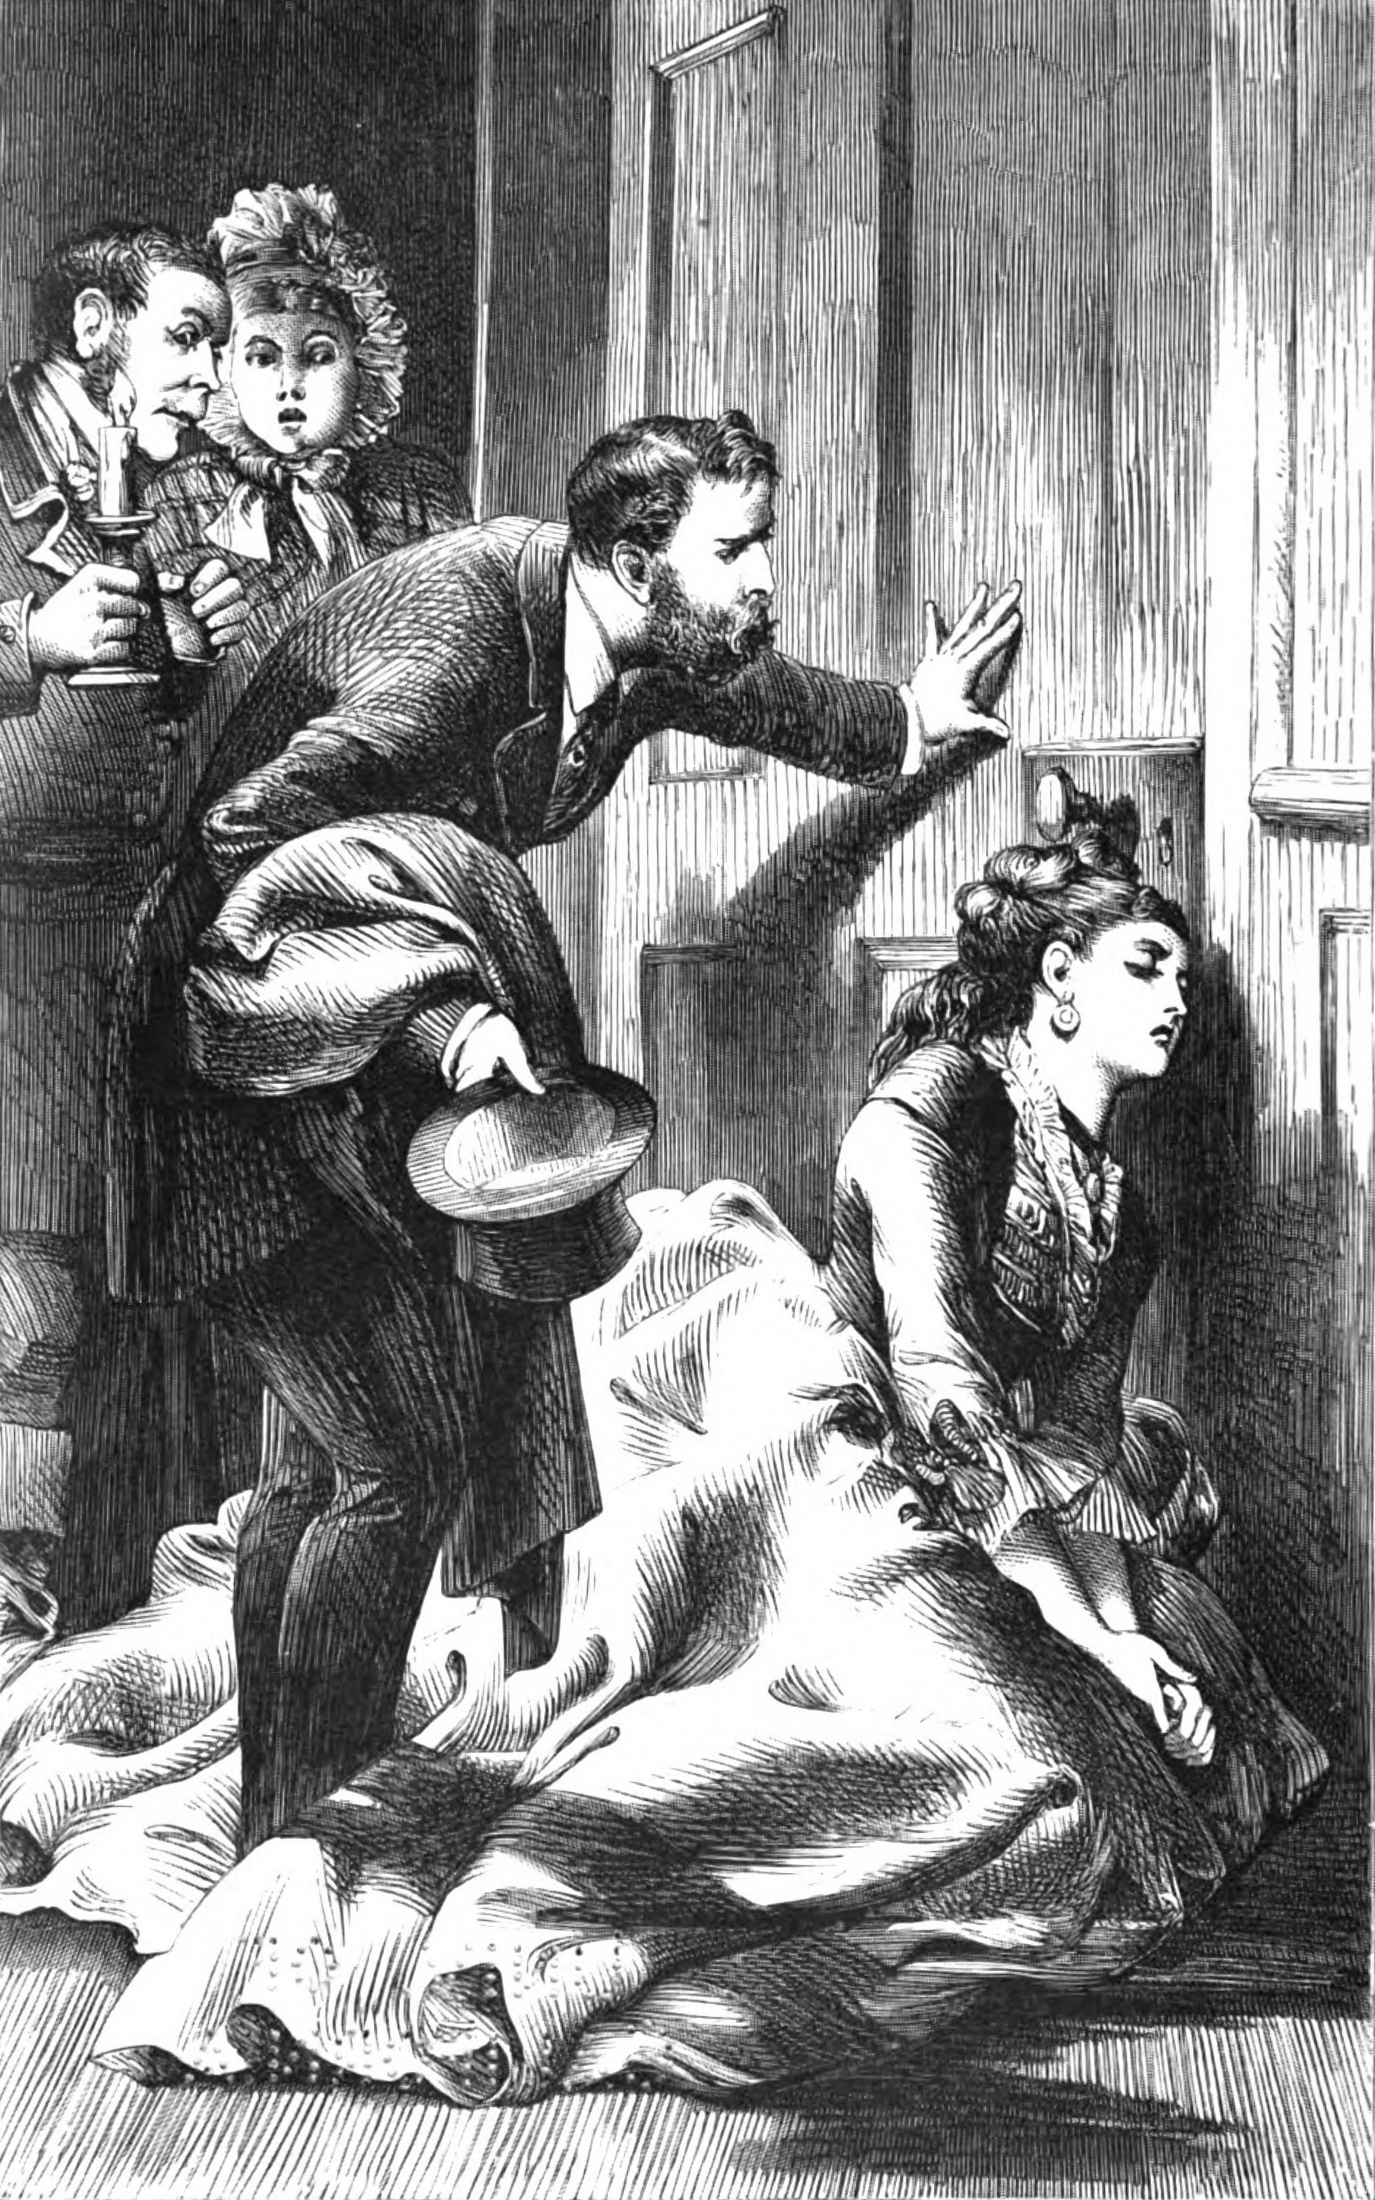 Image Description: Mrs. Connor lies unconscious against a door. Three people stand behind her. End Description.